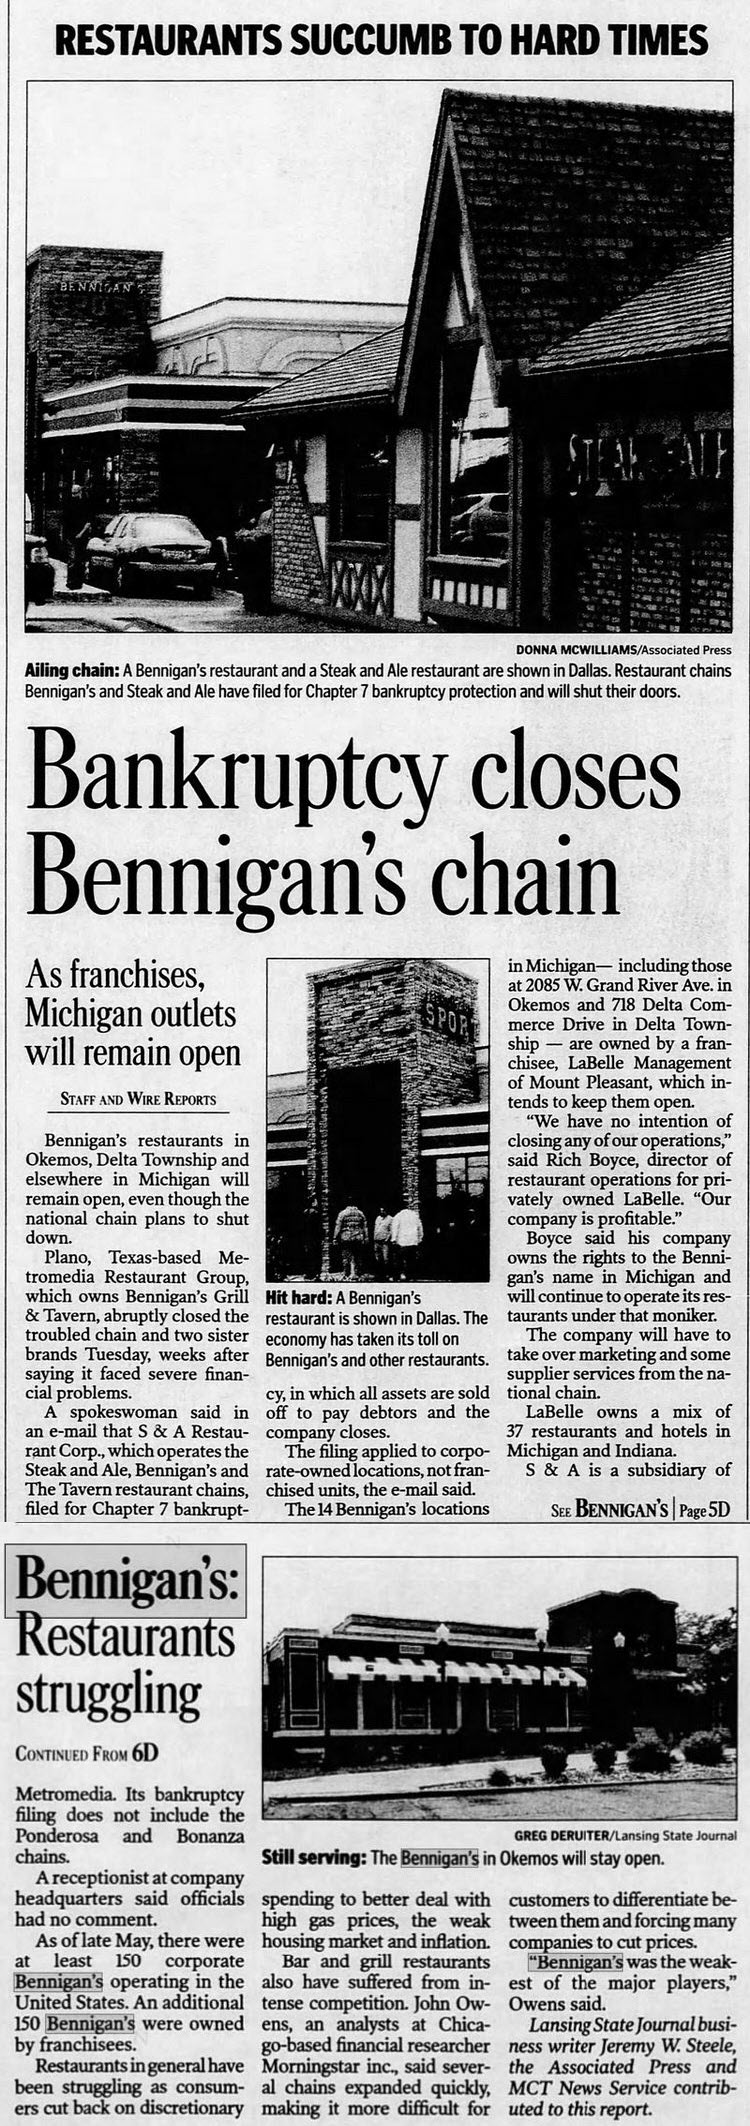 Bennigan’s - Jul 30 2008 Article On Bankruptcy